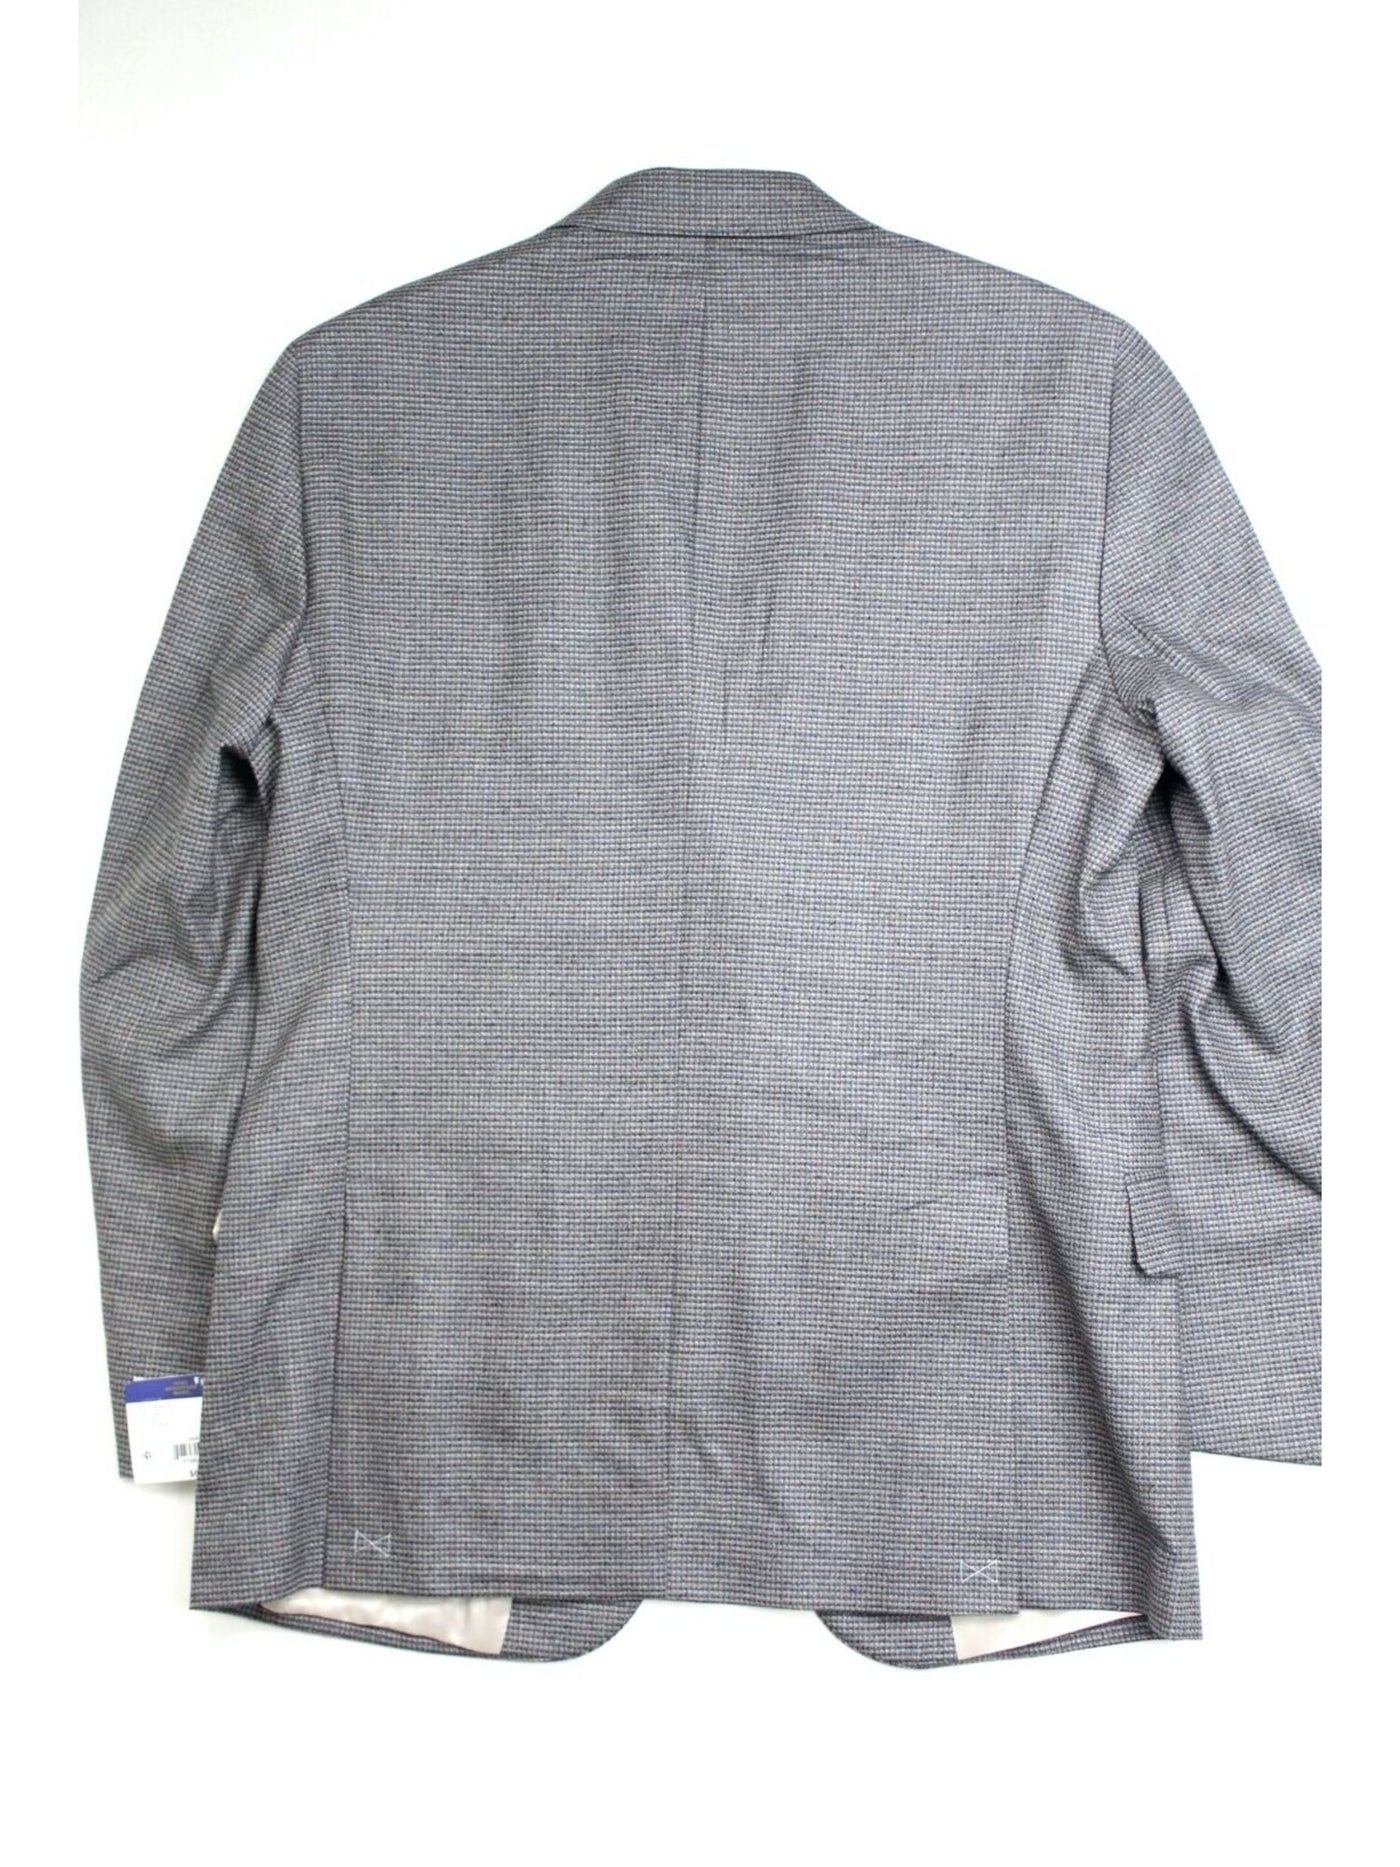 HART SCHAFFNER MARX Mens Gray Single Breasted, Check Stretch Blazer Jacket 40 Short